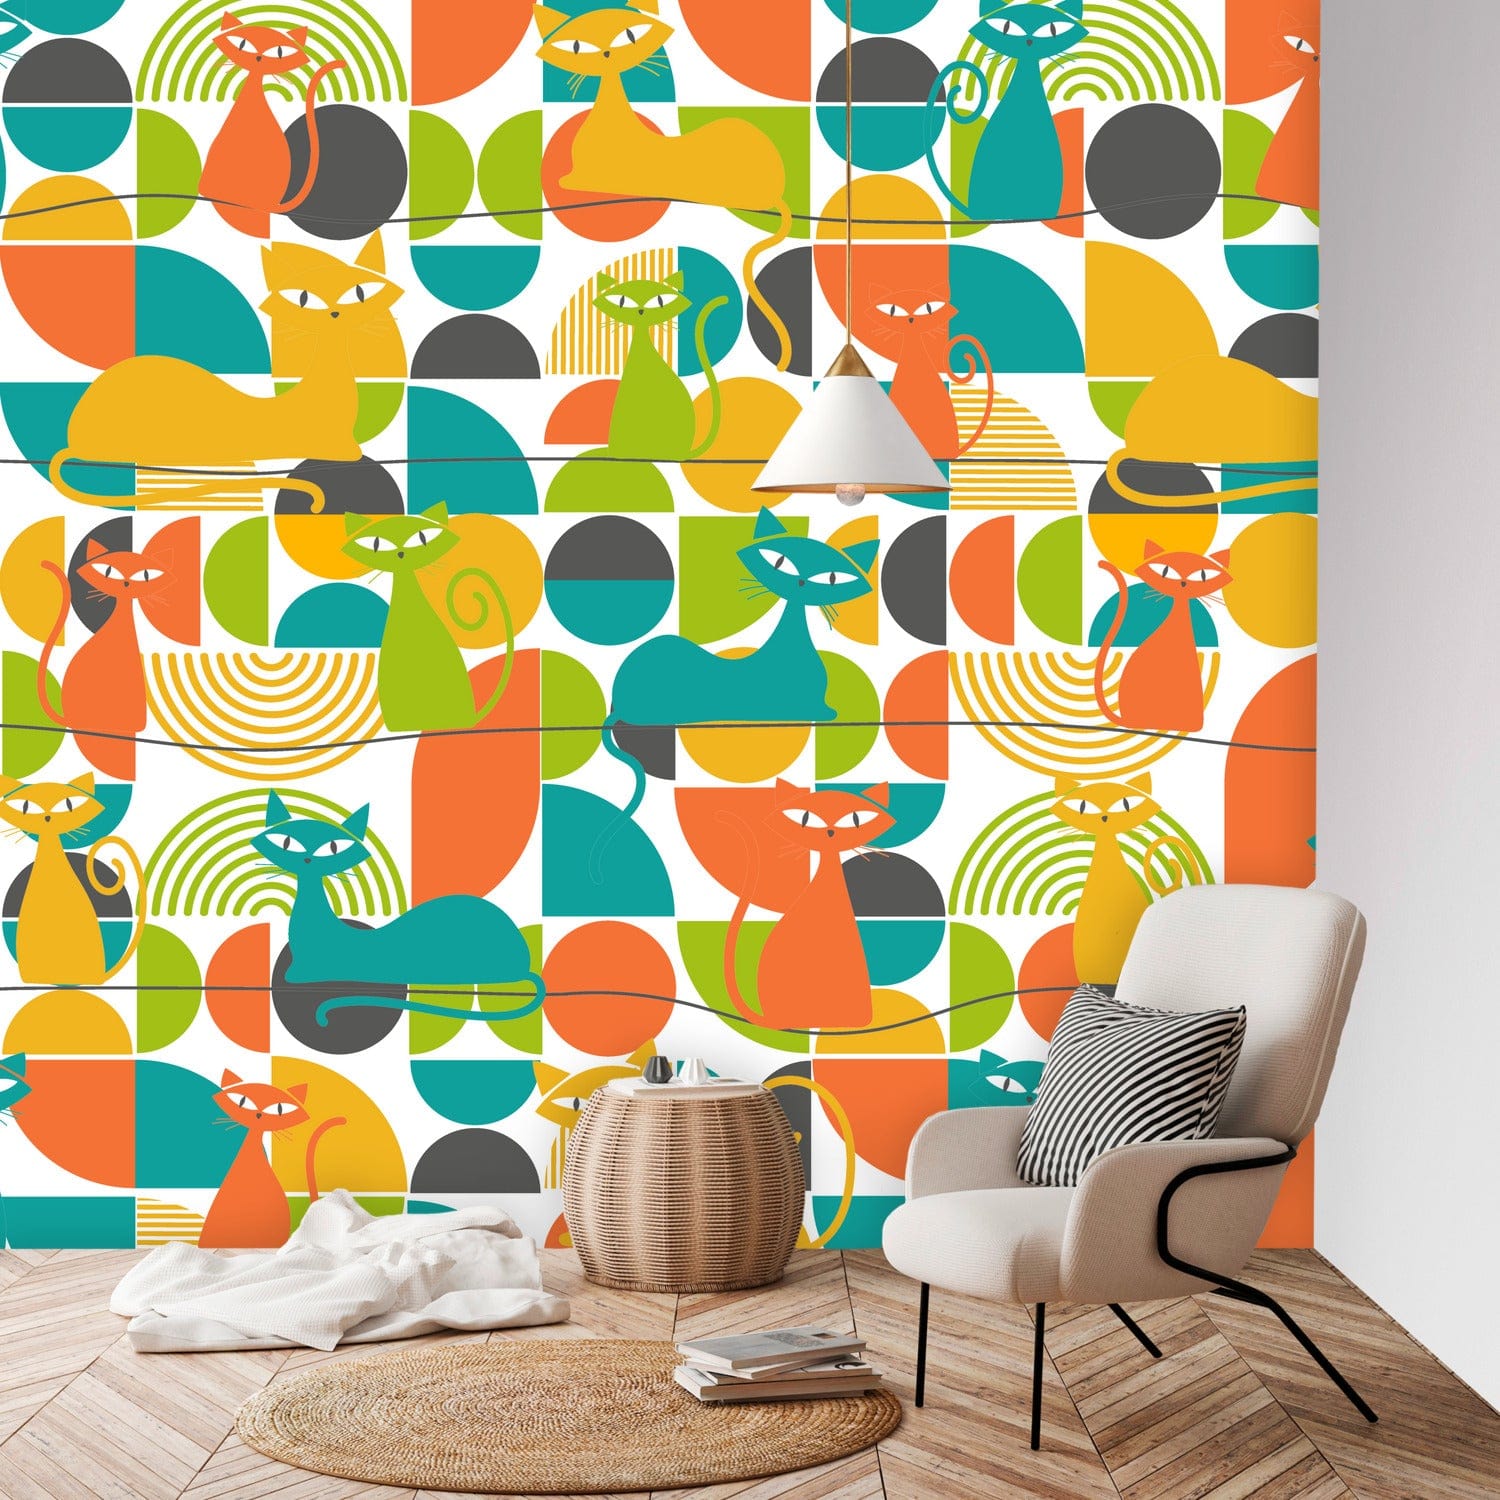 Mid Century Modern Wallpaper, Atomic Kitties, Geometric, Bold, Colorful, Orange, Teal, Yellow, Funky Fun, Kitsch Retro, Wall Murals Wallpaper H96 x W100